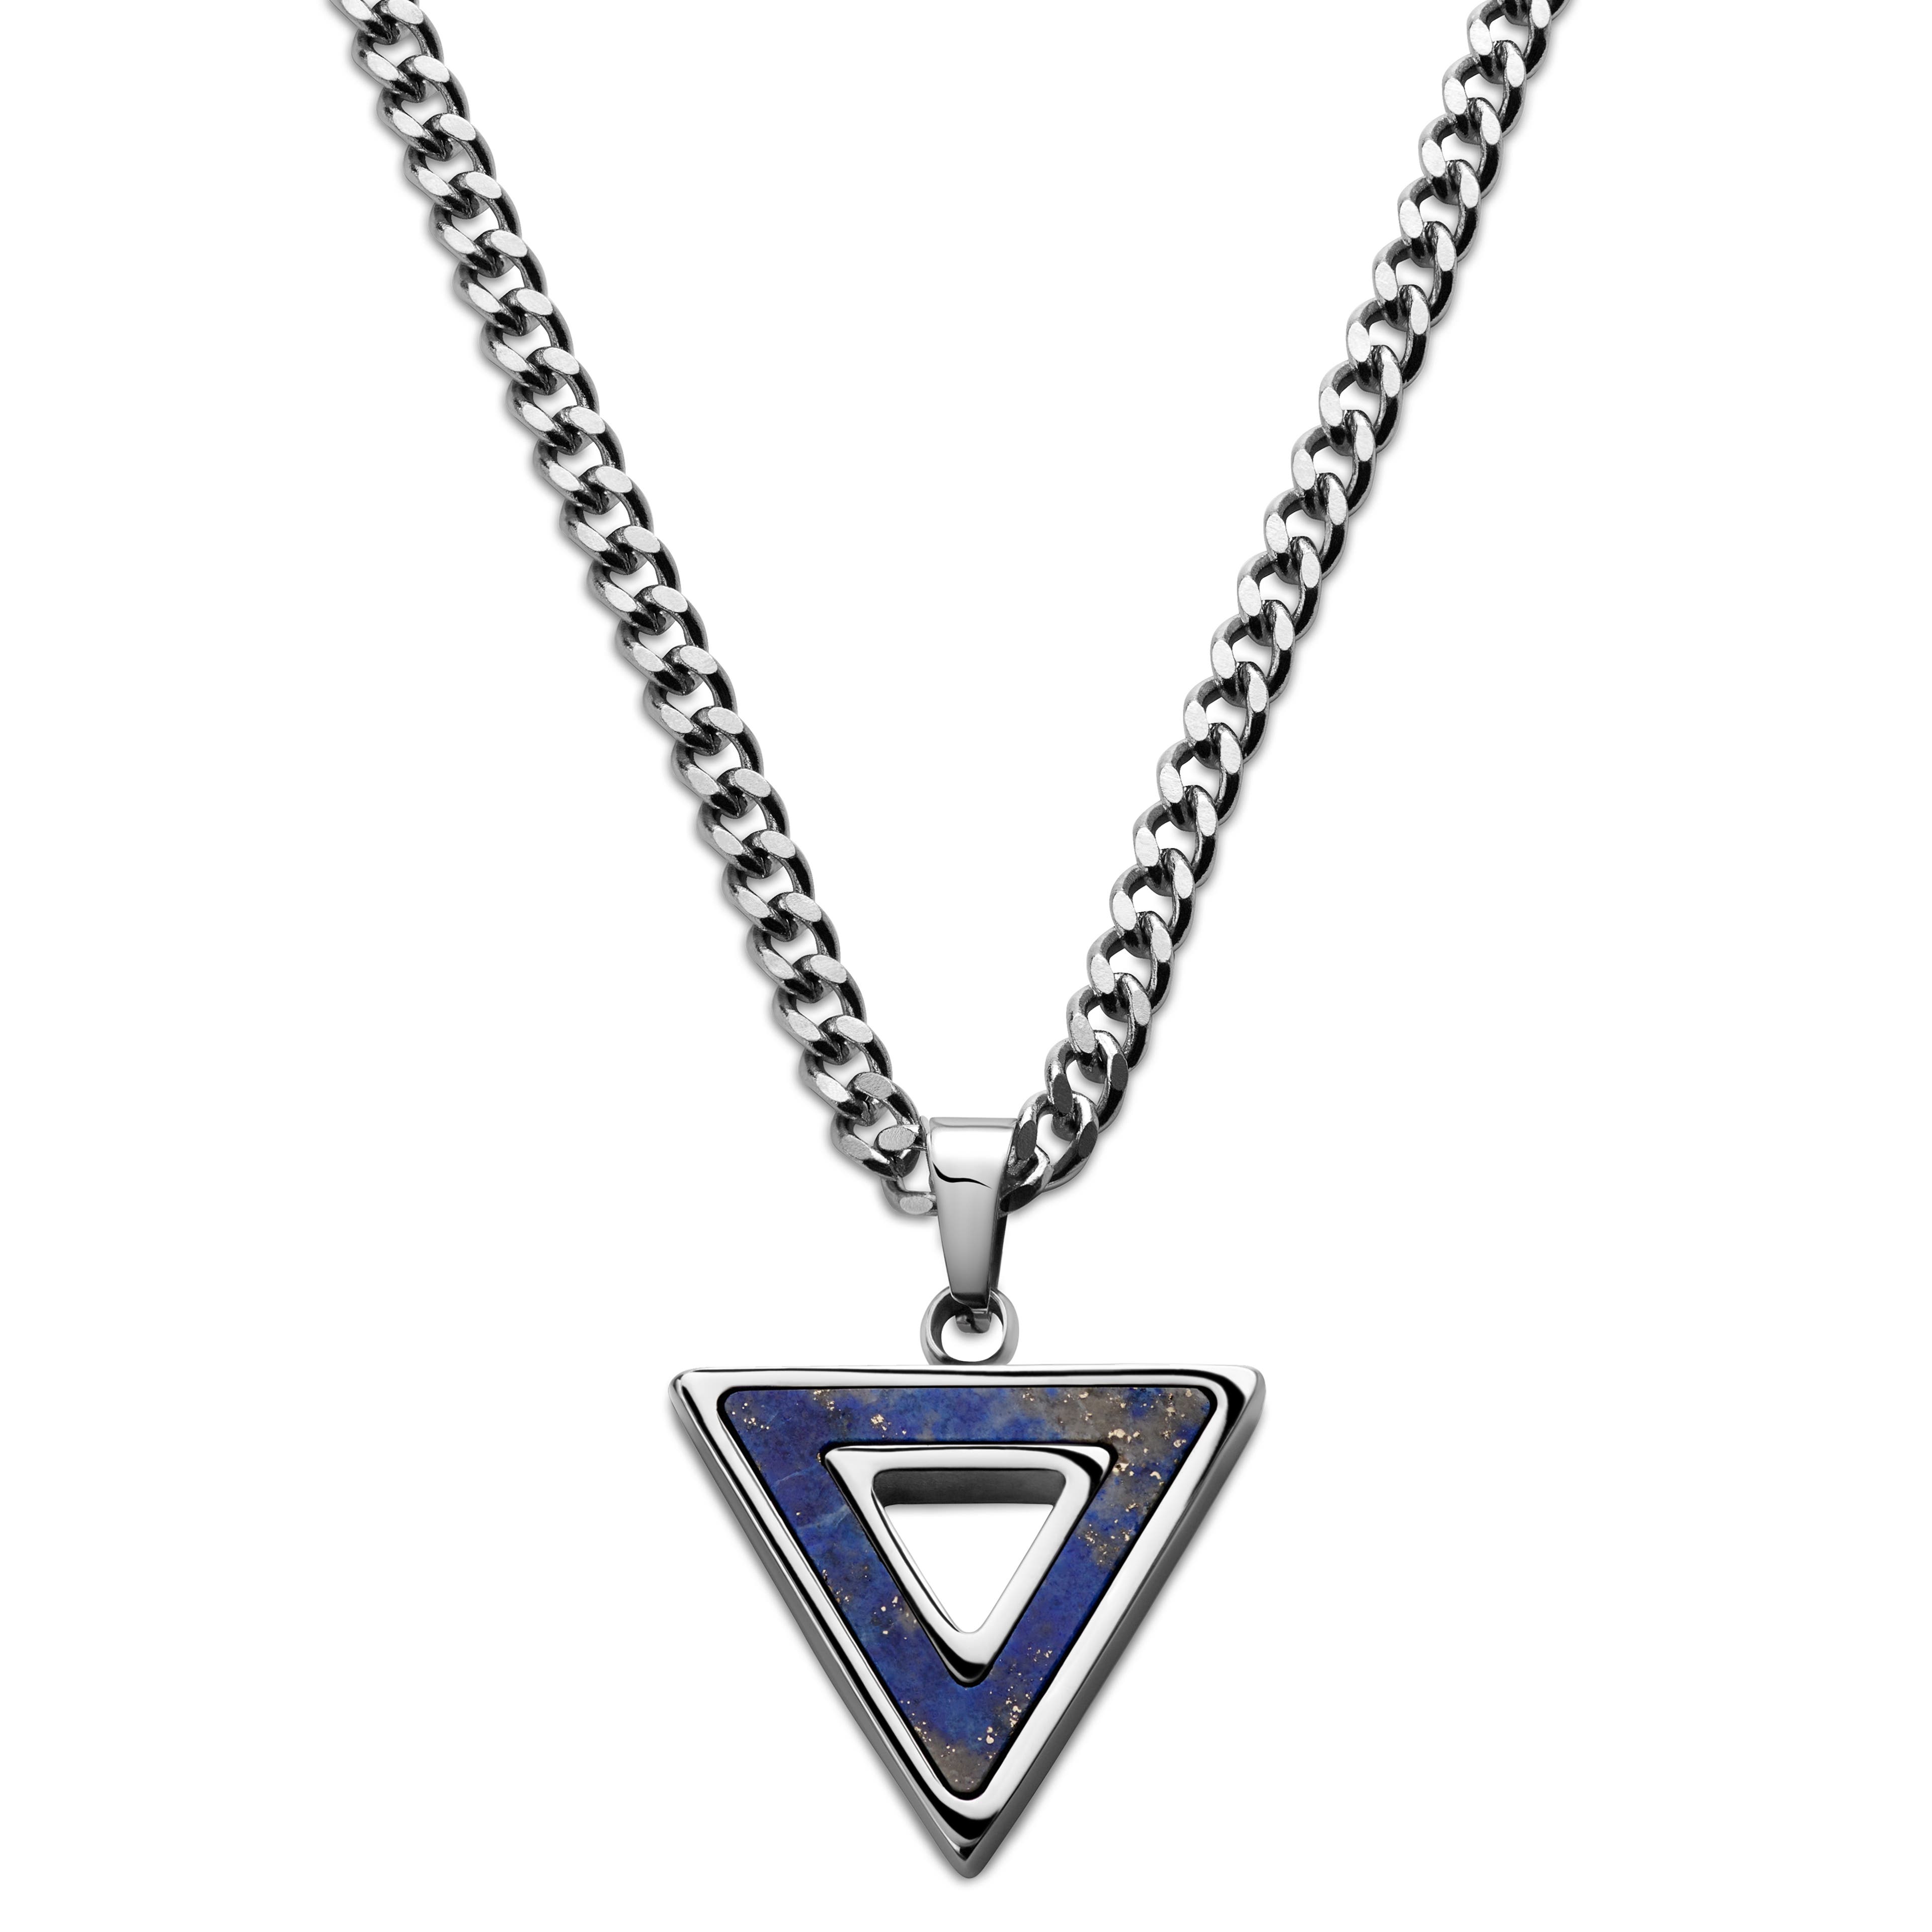 Cruz | Silver-Tone Stainless Steel & Lapis Lazuli Triangle Necklace